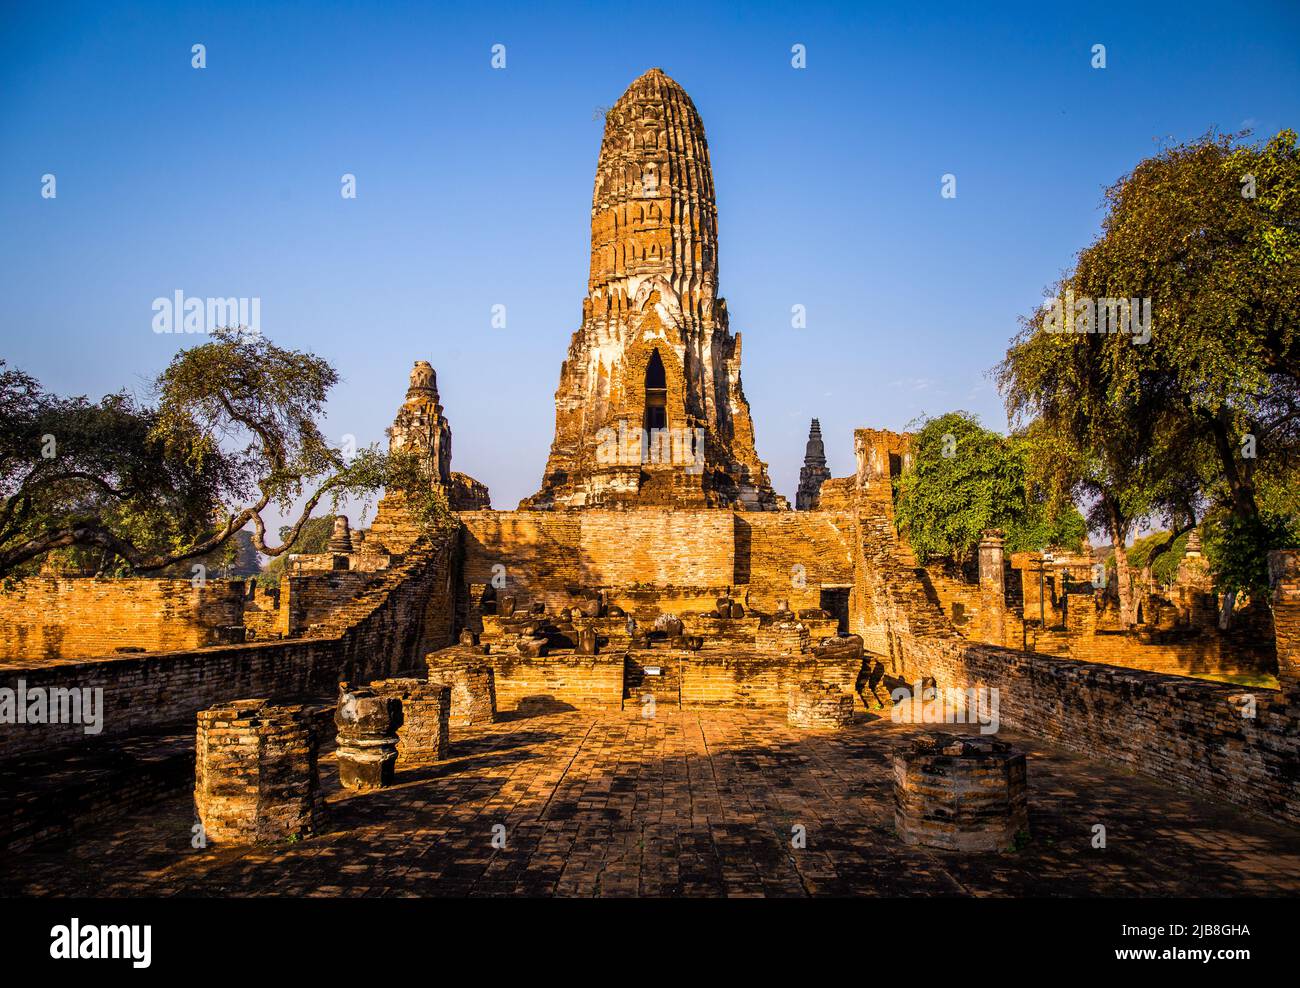 Wat Phra Ram ruin temple in Phra Nakhon Si Ayutthaya, Thailand Stock Photo  - Alamy